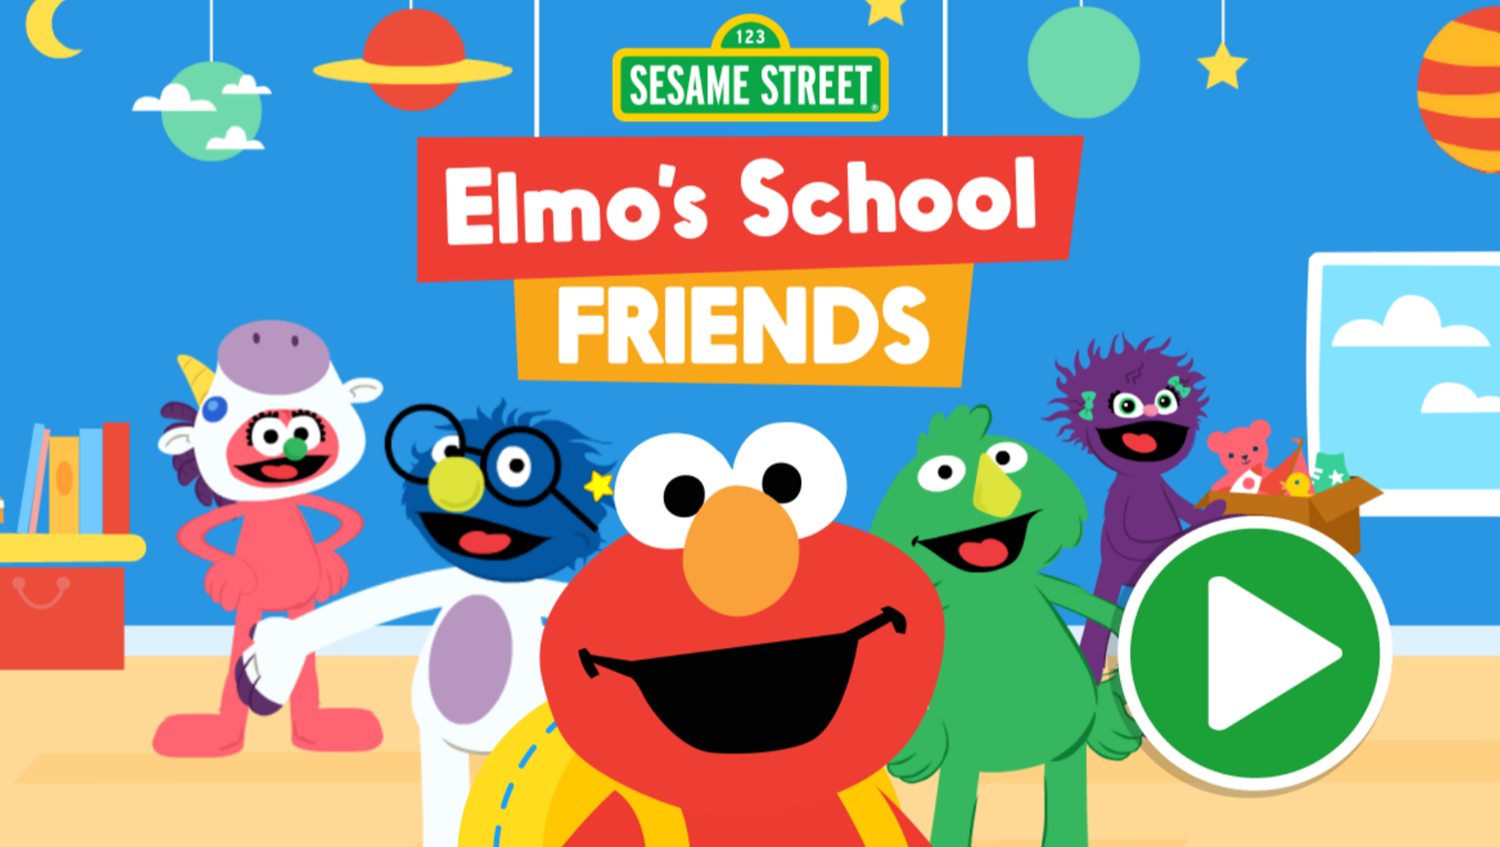 Sesame Street Elmo's School Friends Game Welcome Screen Screenshot.